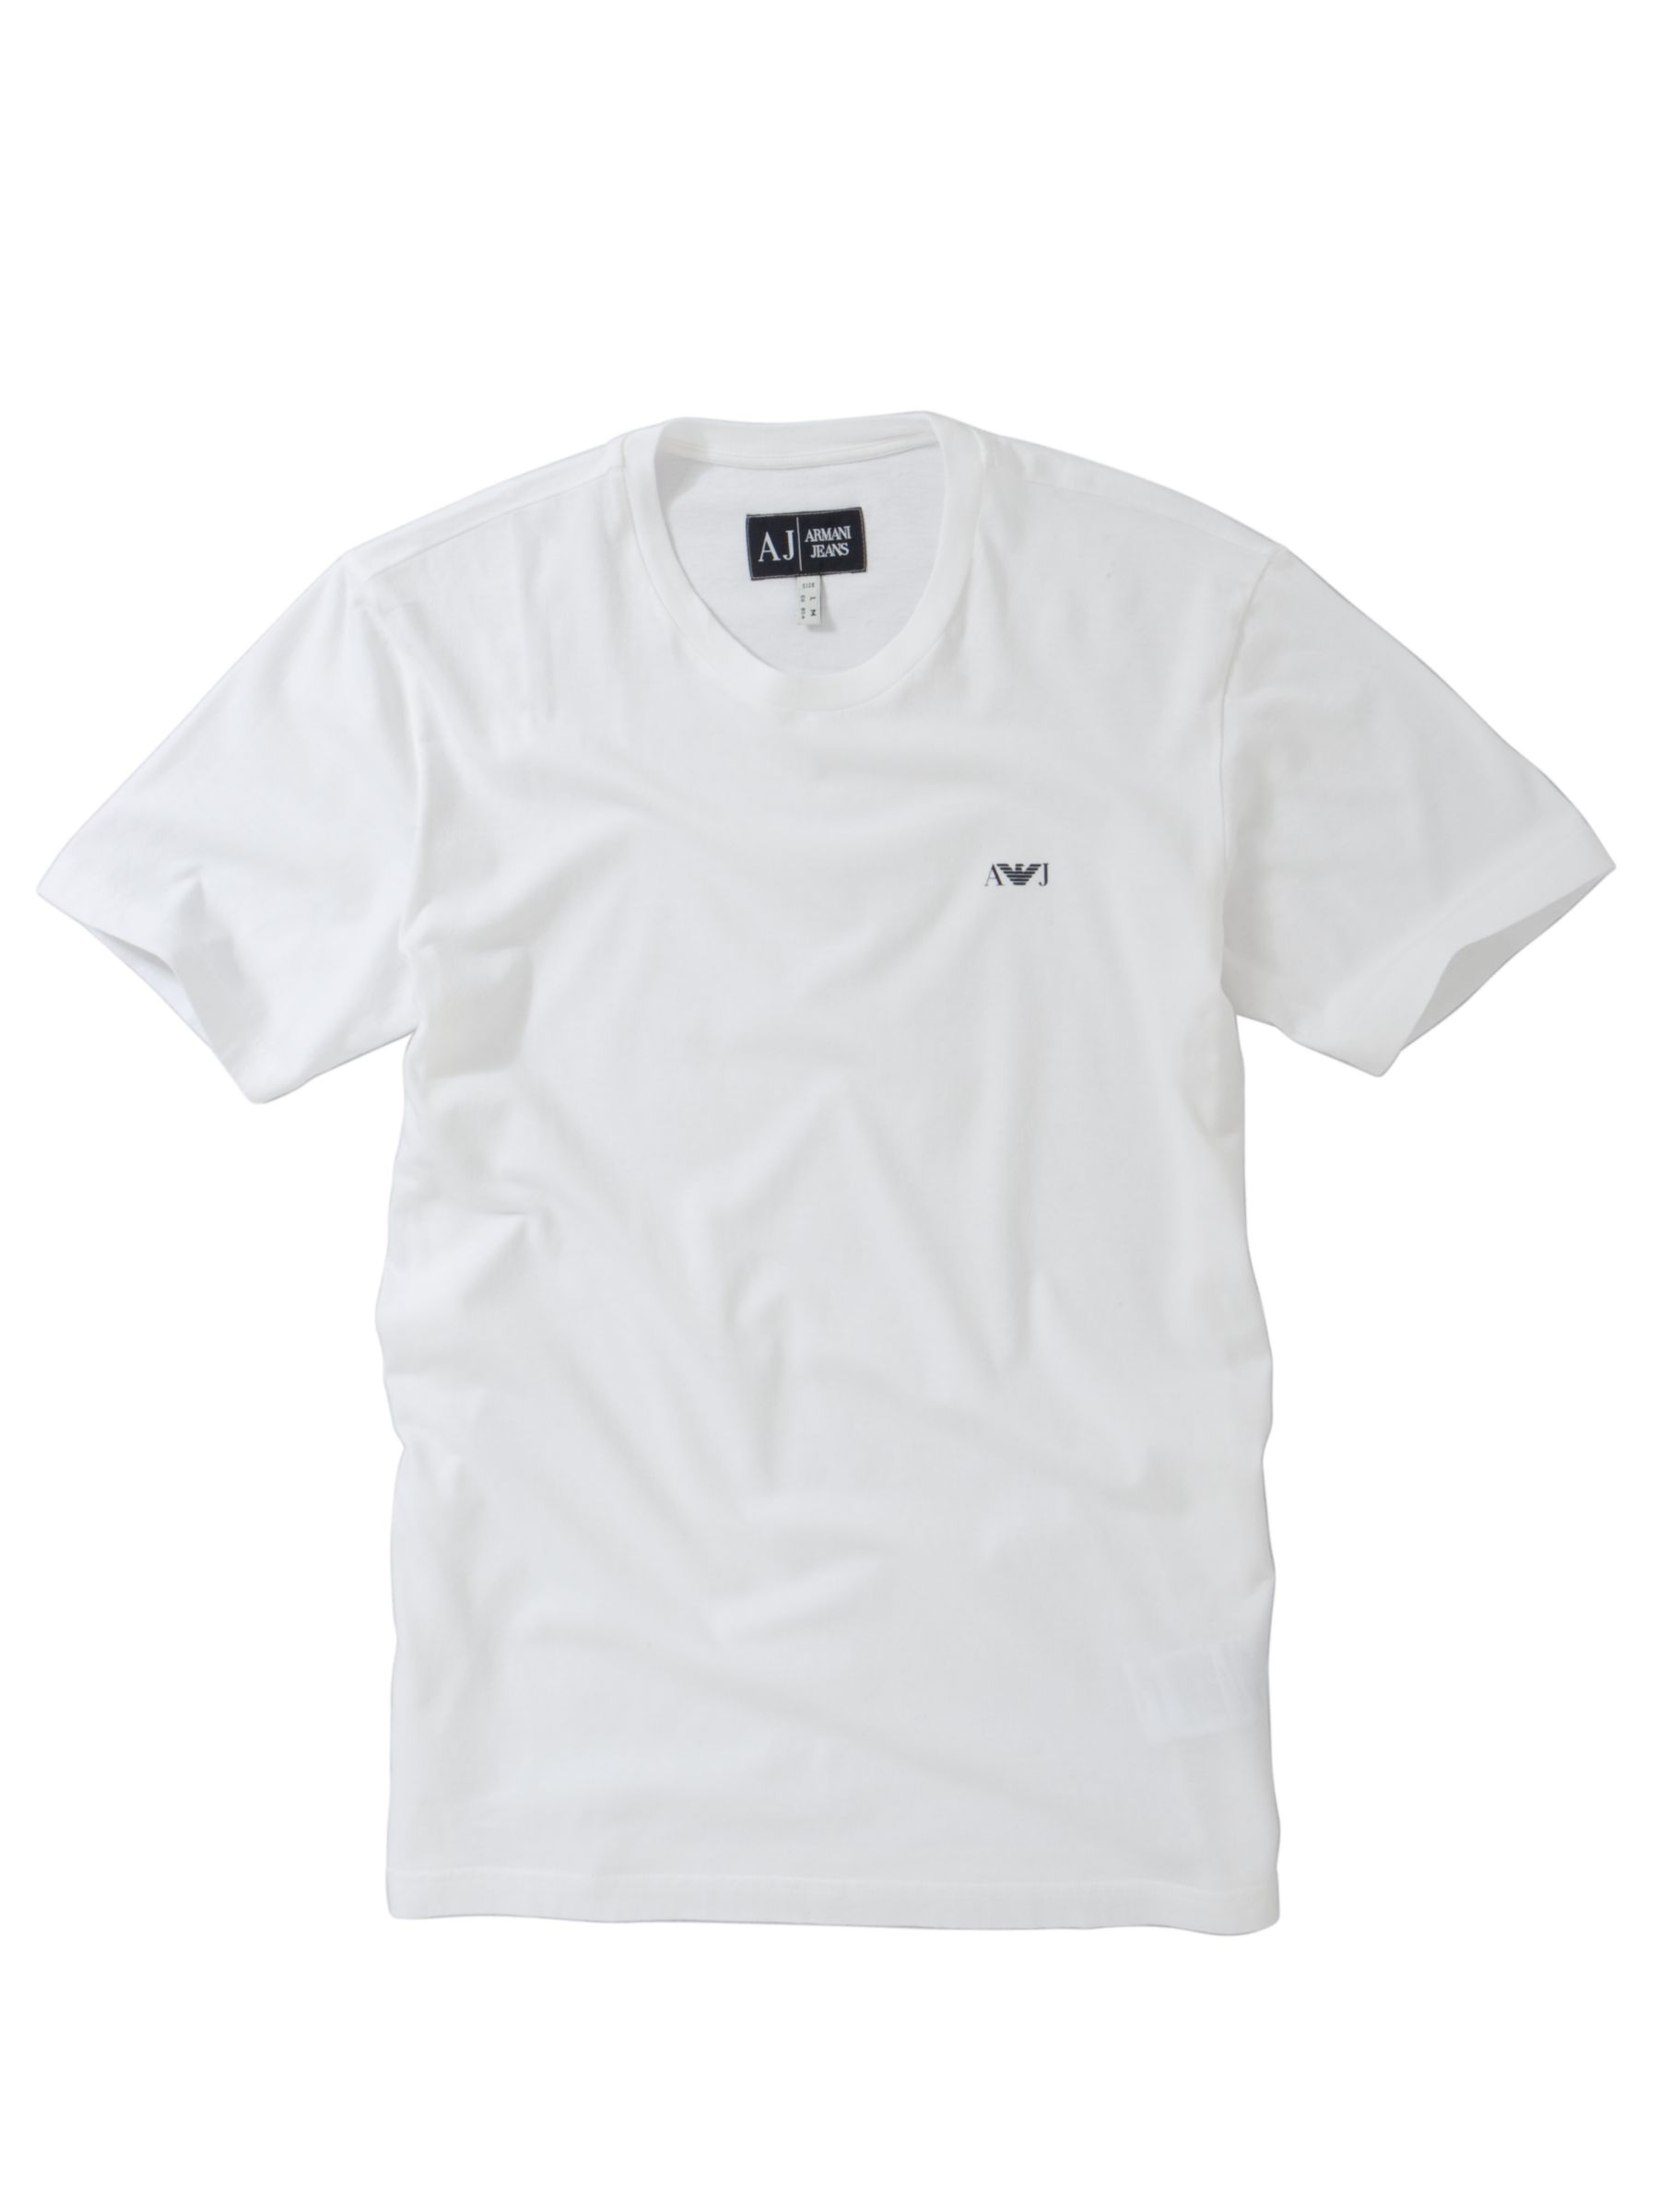 Armani Jeans Basic T-Shirt, White